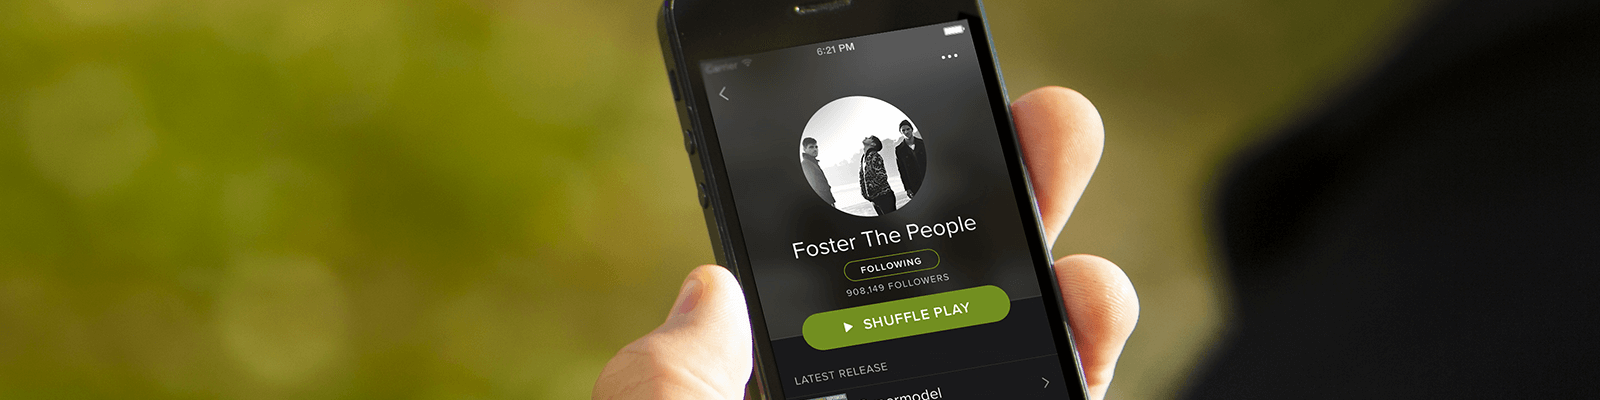 app like spotify music